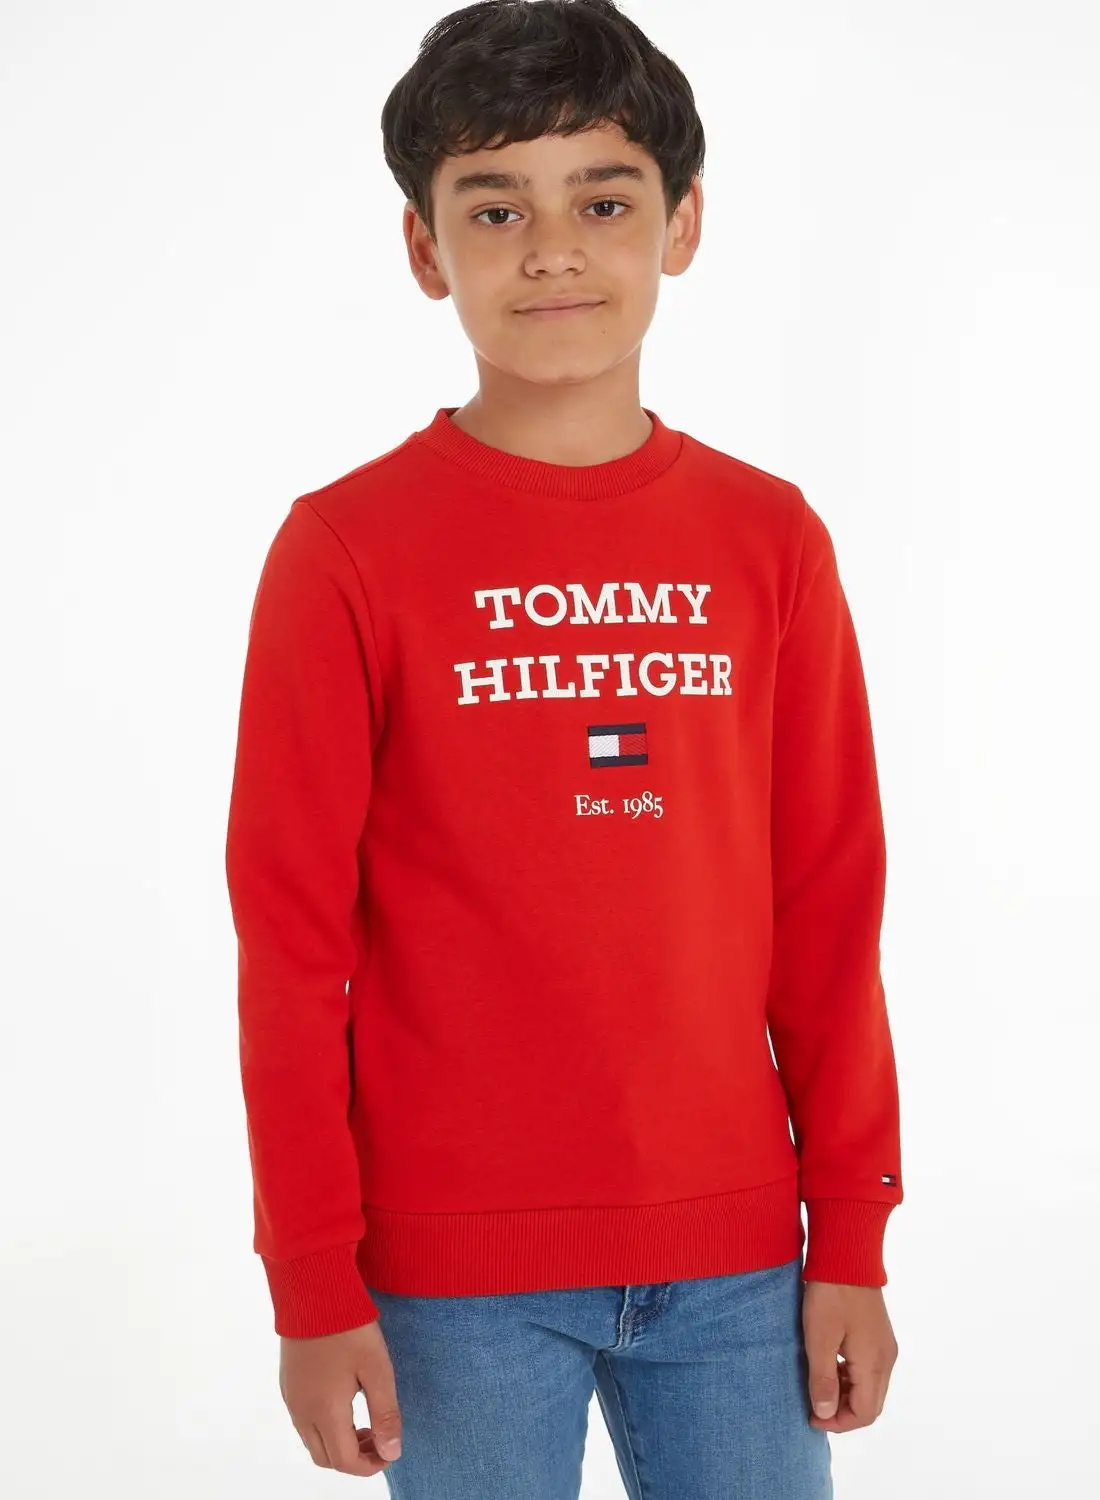 TOMMY HILFIGER Kids Logo Sweatshirt